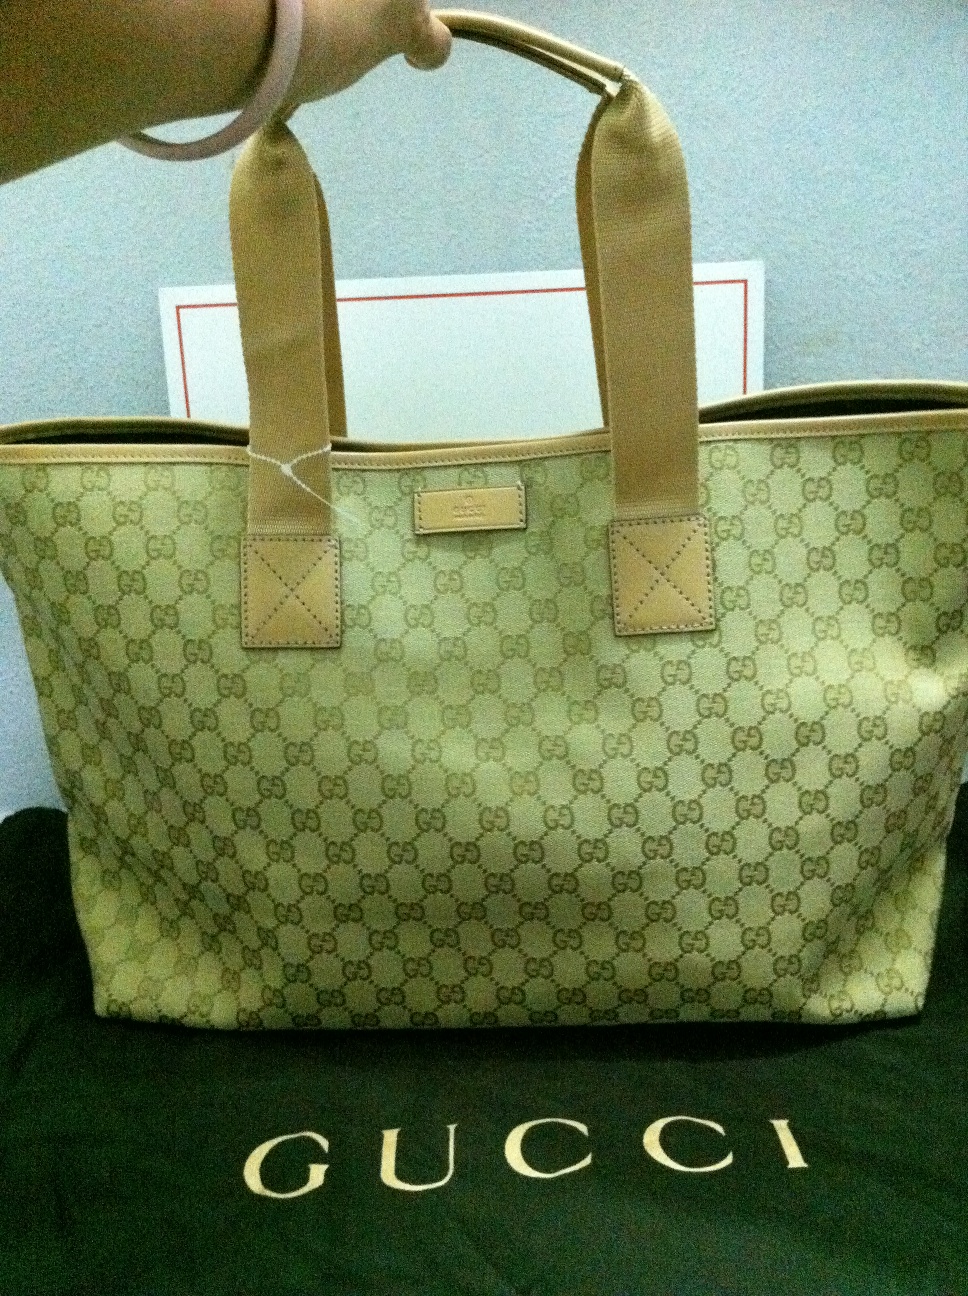 Authentic Luxury Items @ Bargain Price: Gucci Tote Bag Big